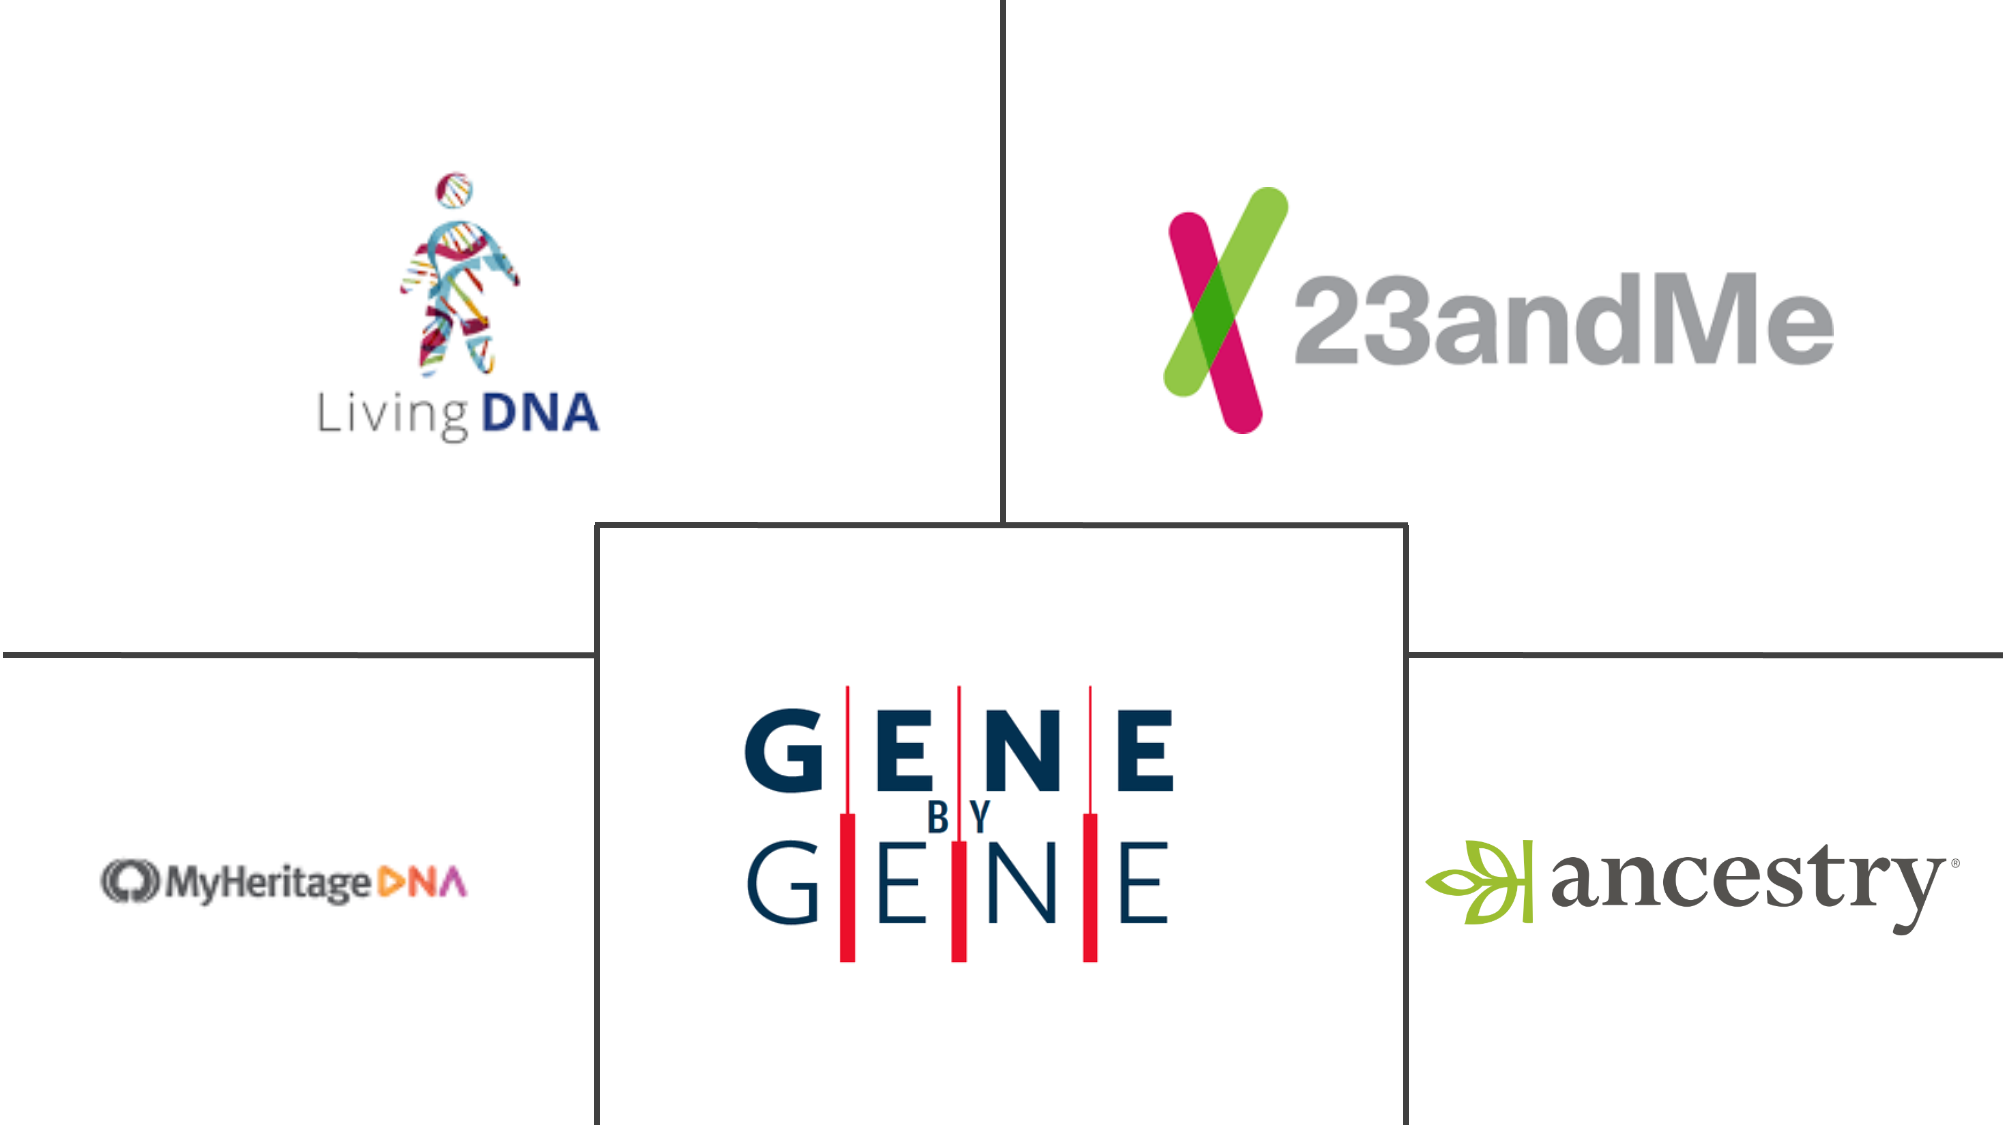 DTC DNA Test Kits Market Key Players